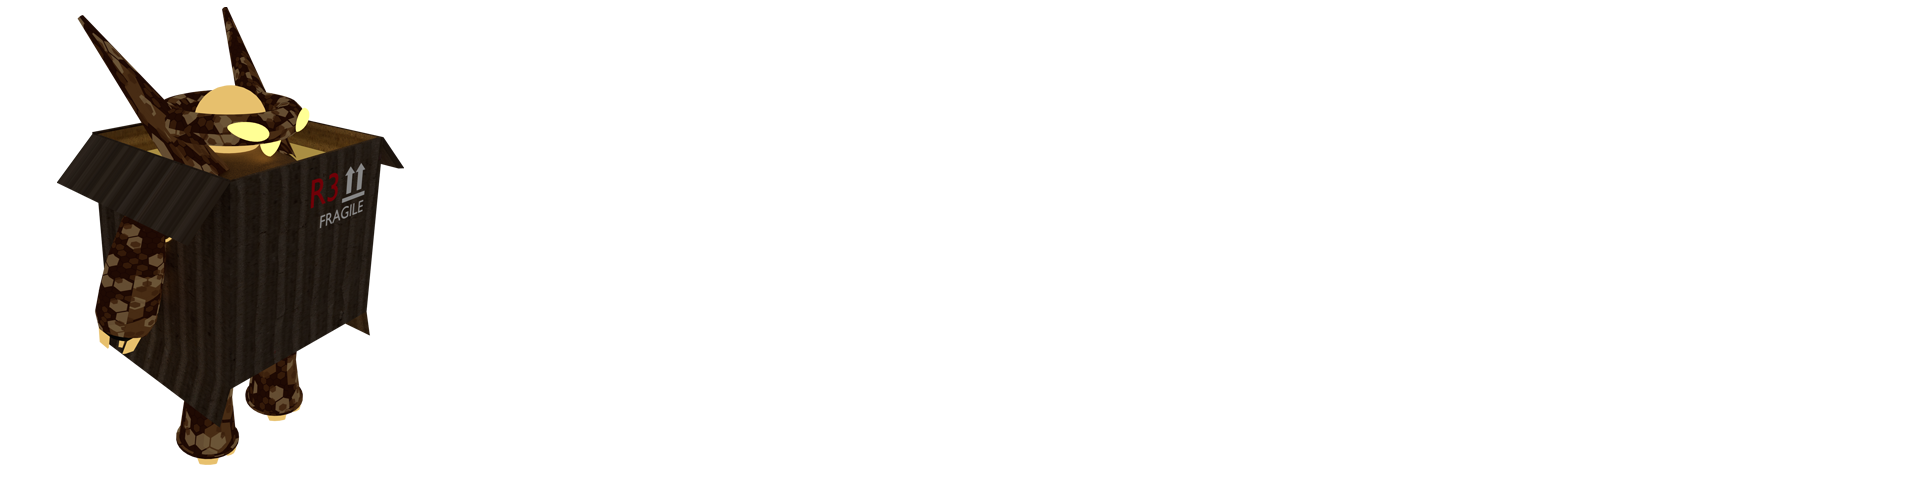 Cardboard Roboto